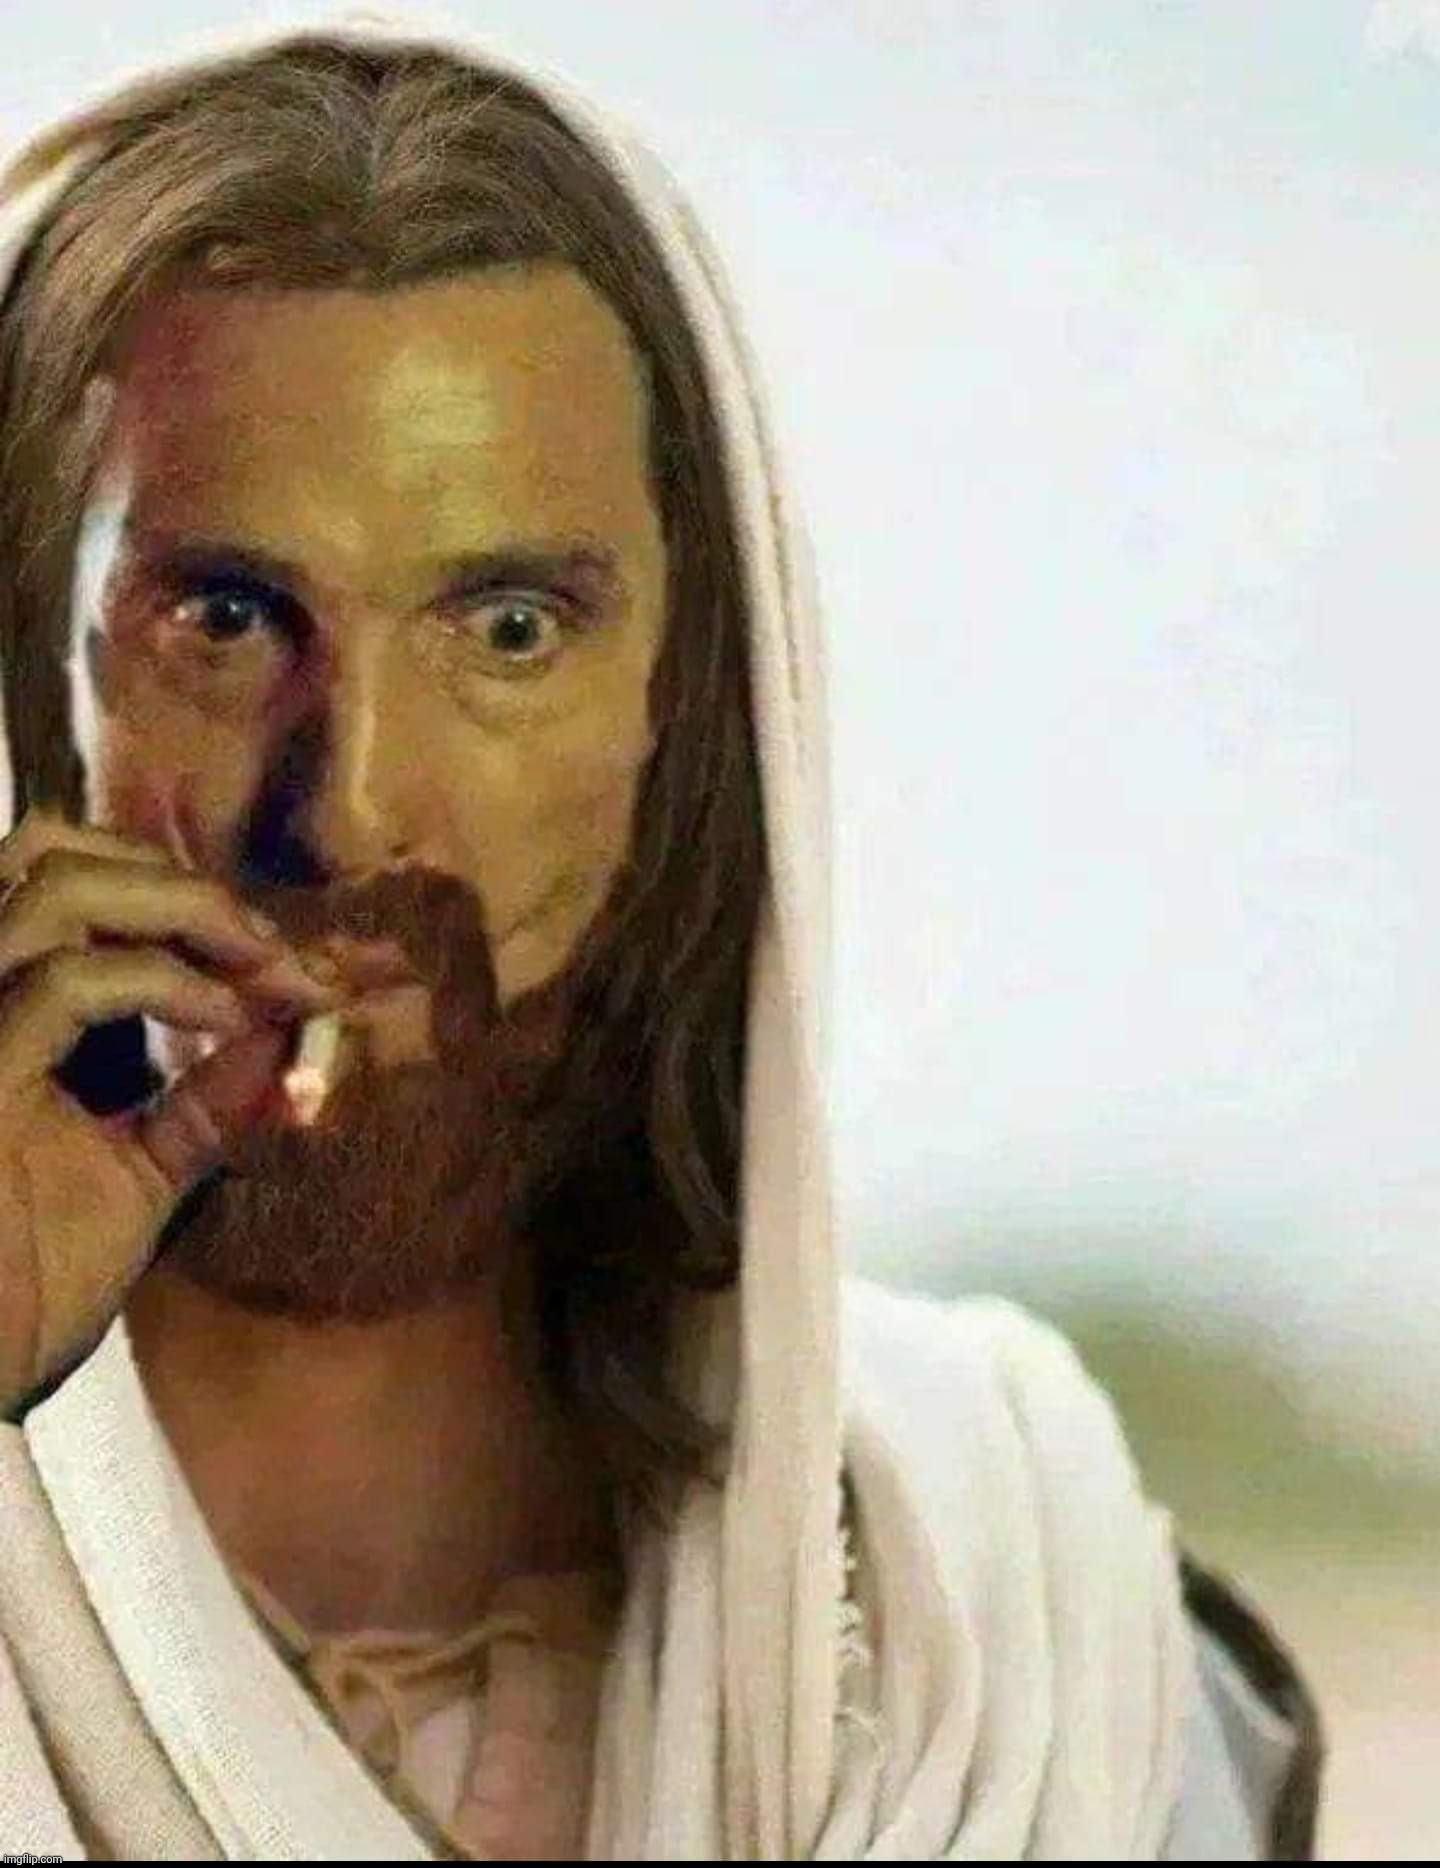 Matthew McConaughey Jesus Smoking | image tagged in matthew mcconaughey,matthew mcconaughey jesus smoking,jesus smoking,jesus,religion | made w/ Imgflip meme maker